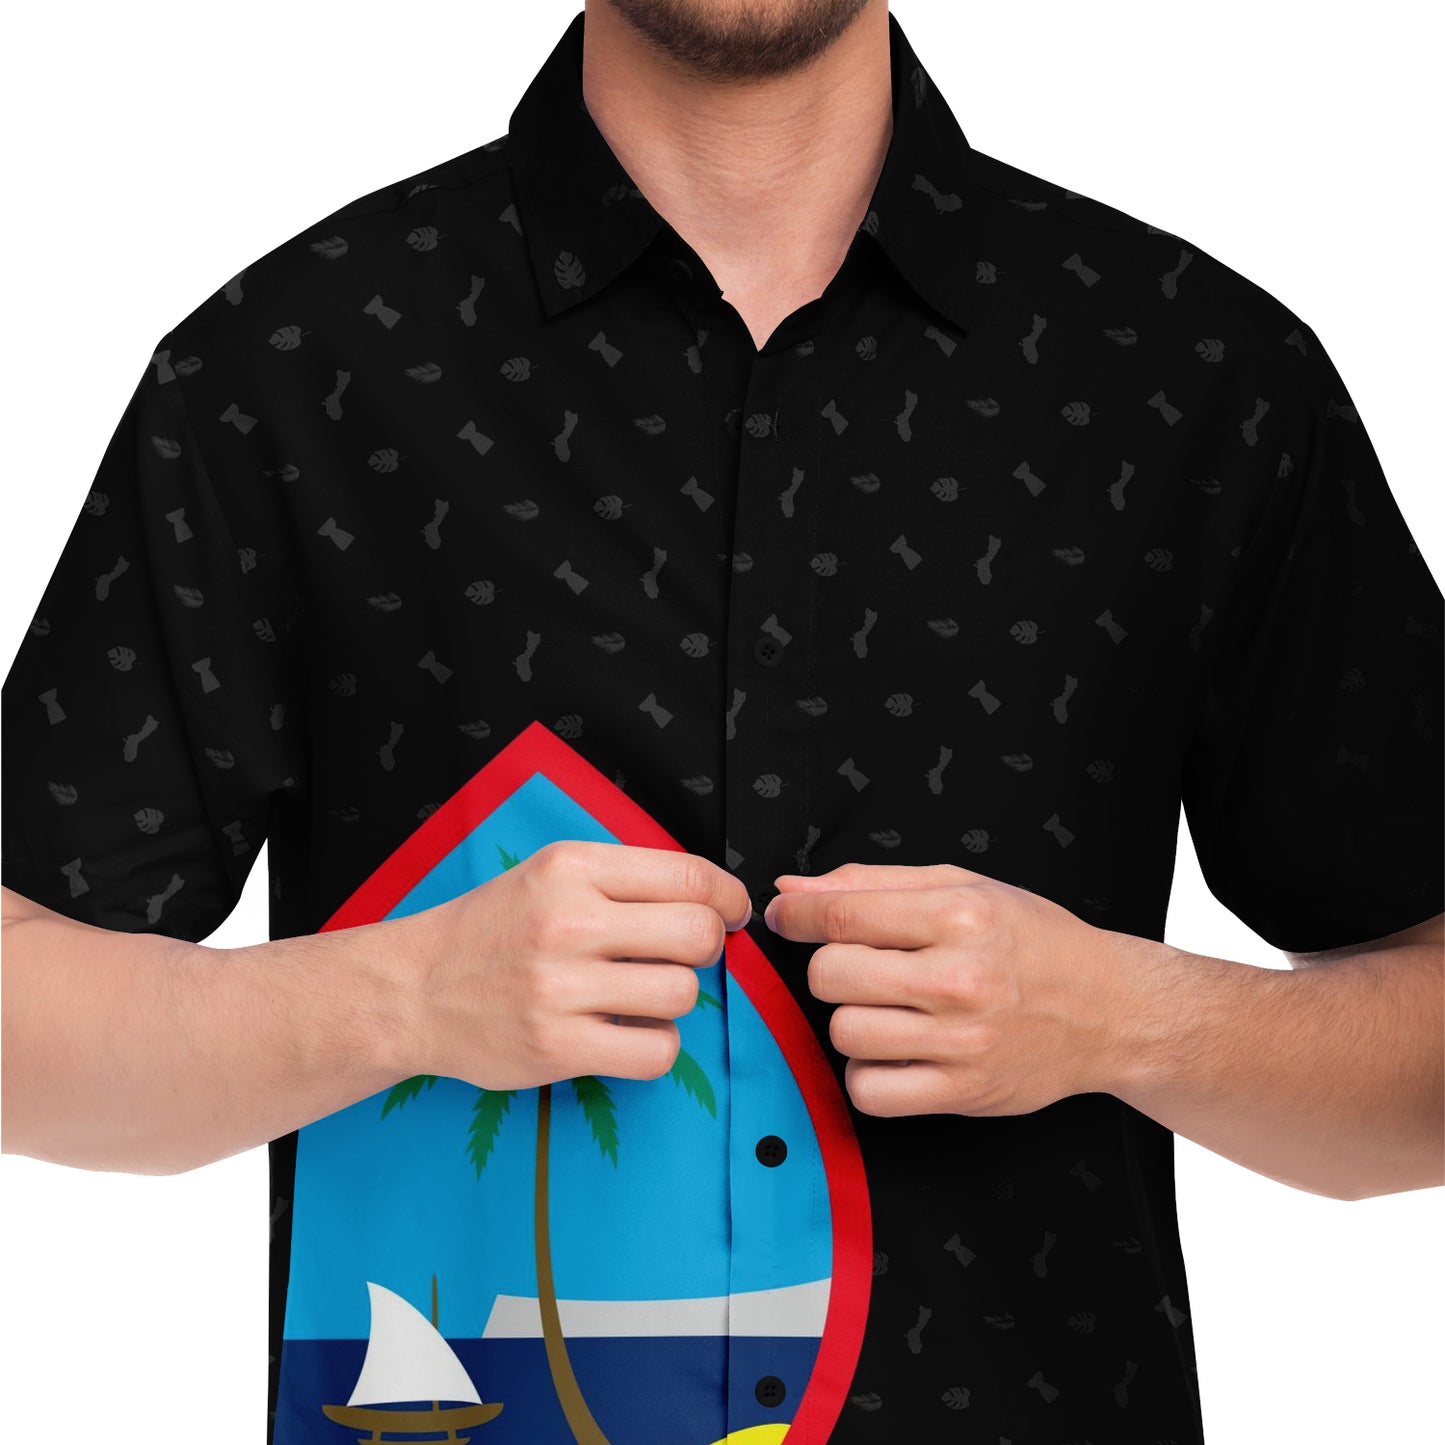 Guam Seal Black Button Down All Over Print Shirt